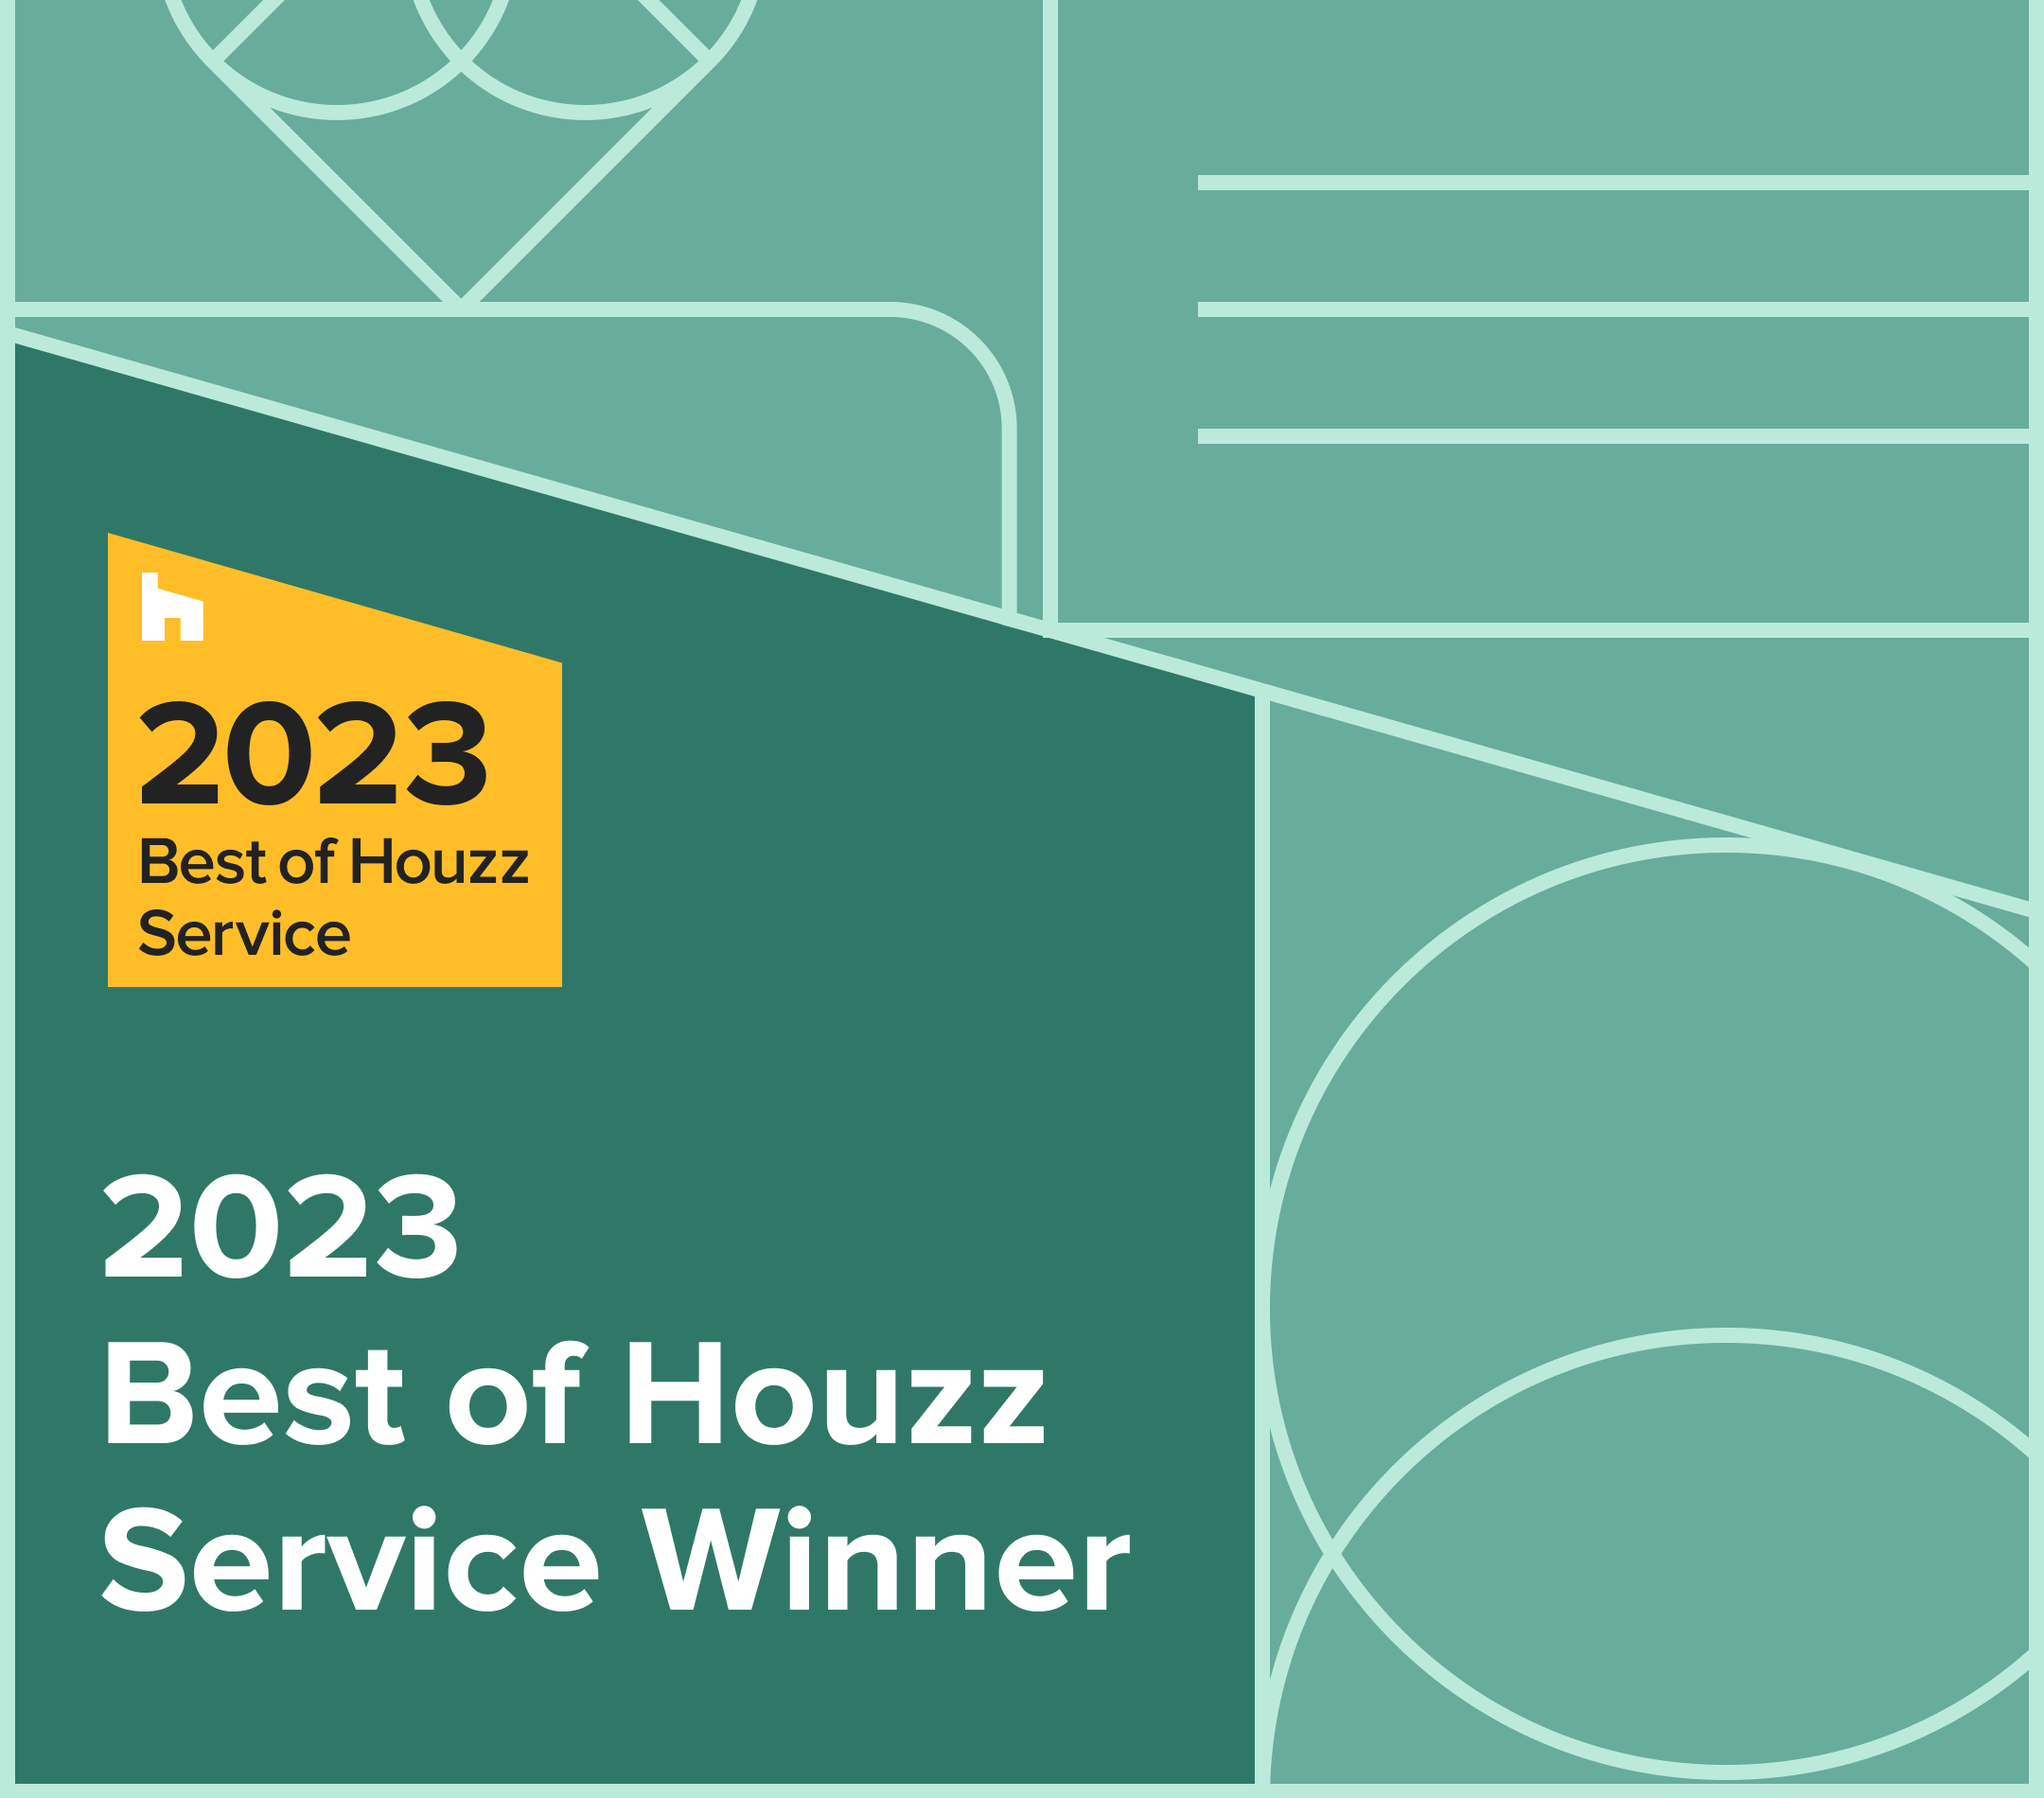 Bluestem wins “Best of Houzz” award for Customer Service!